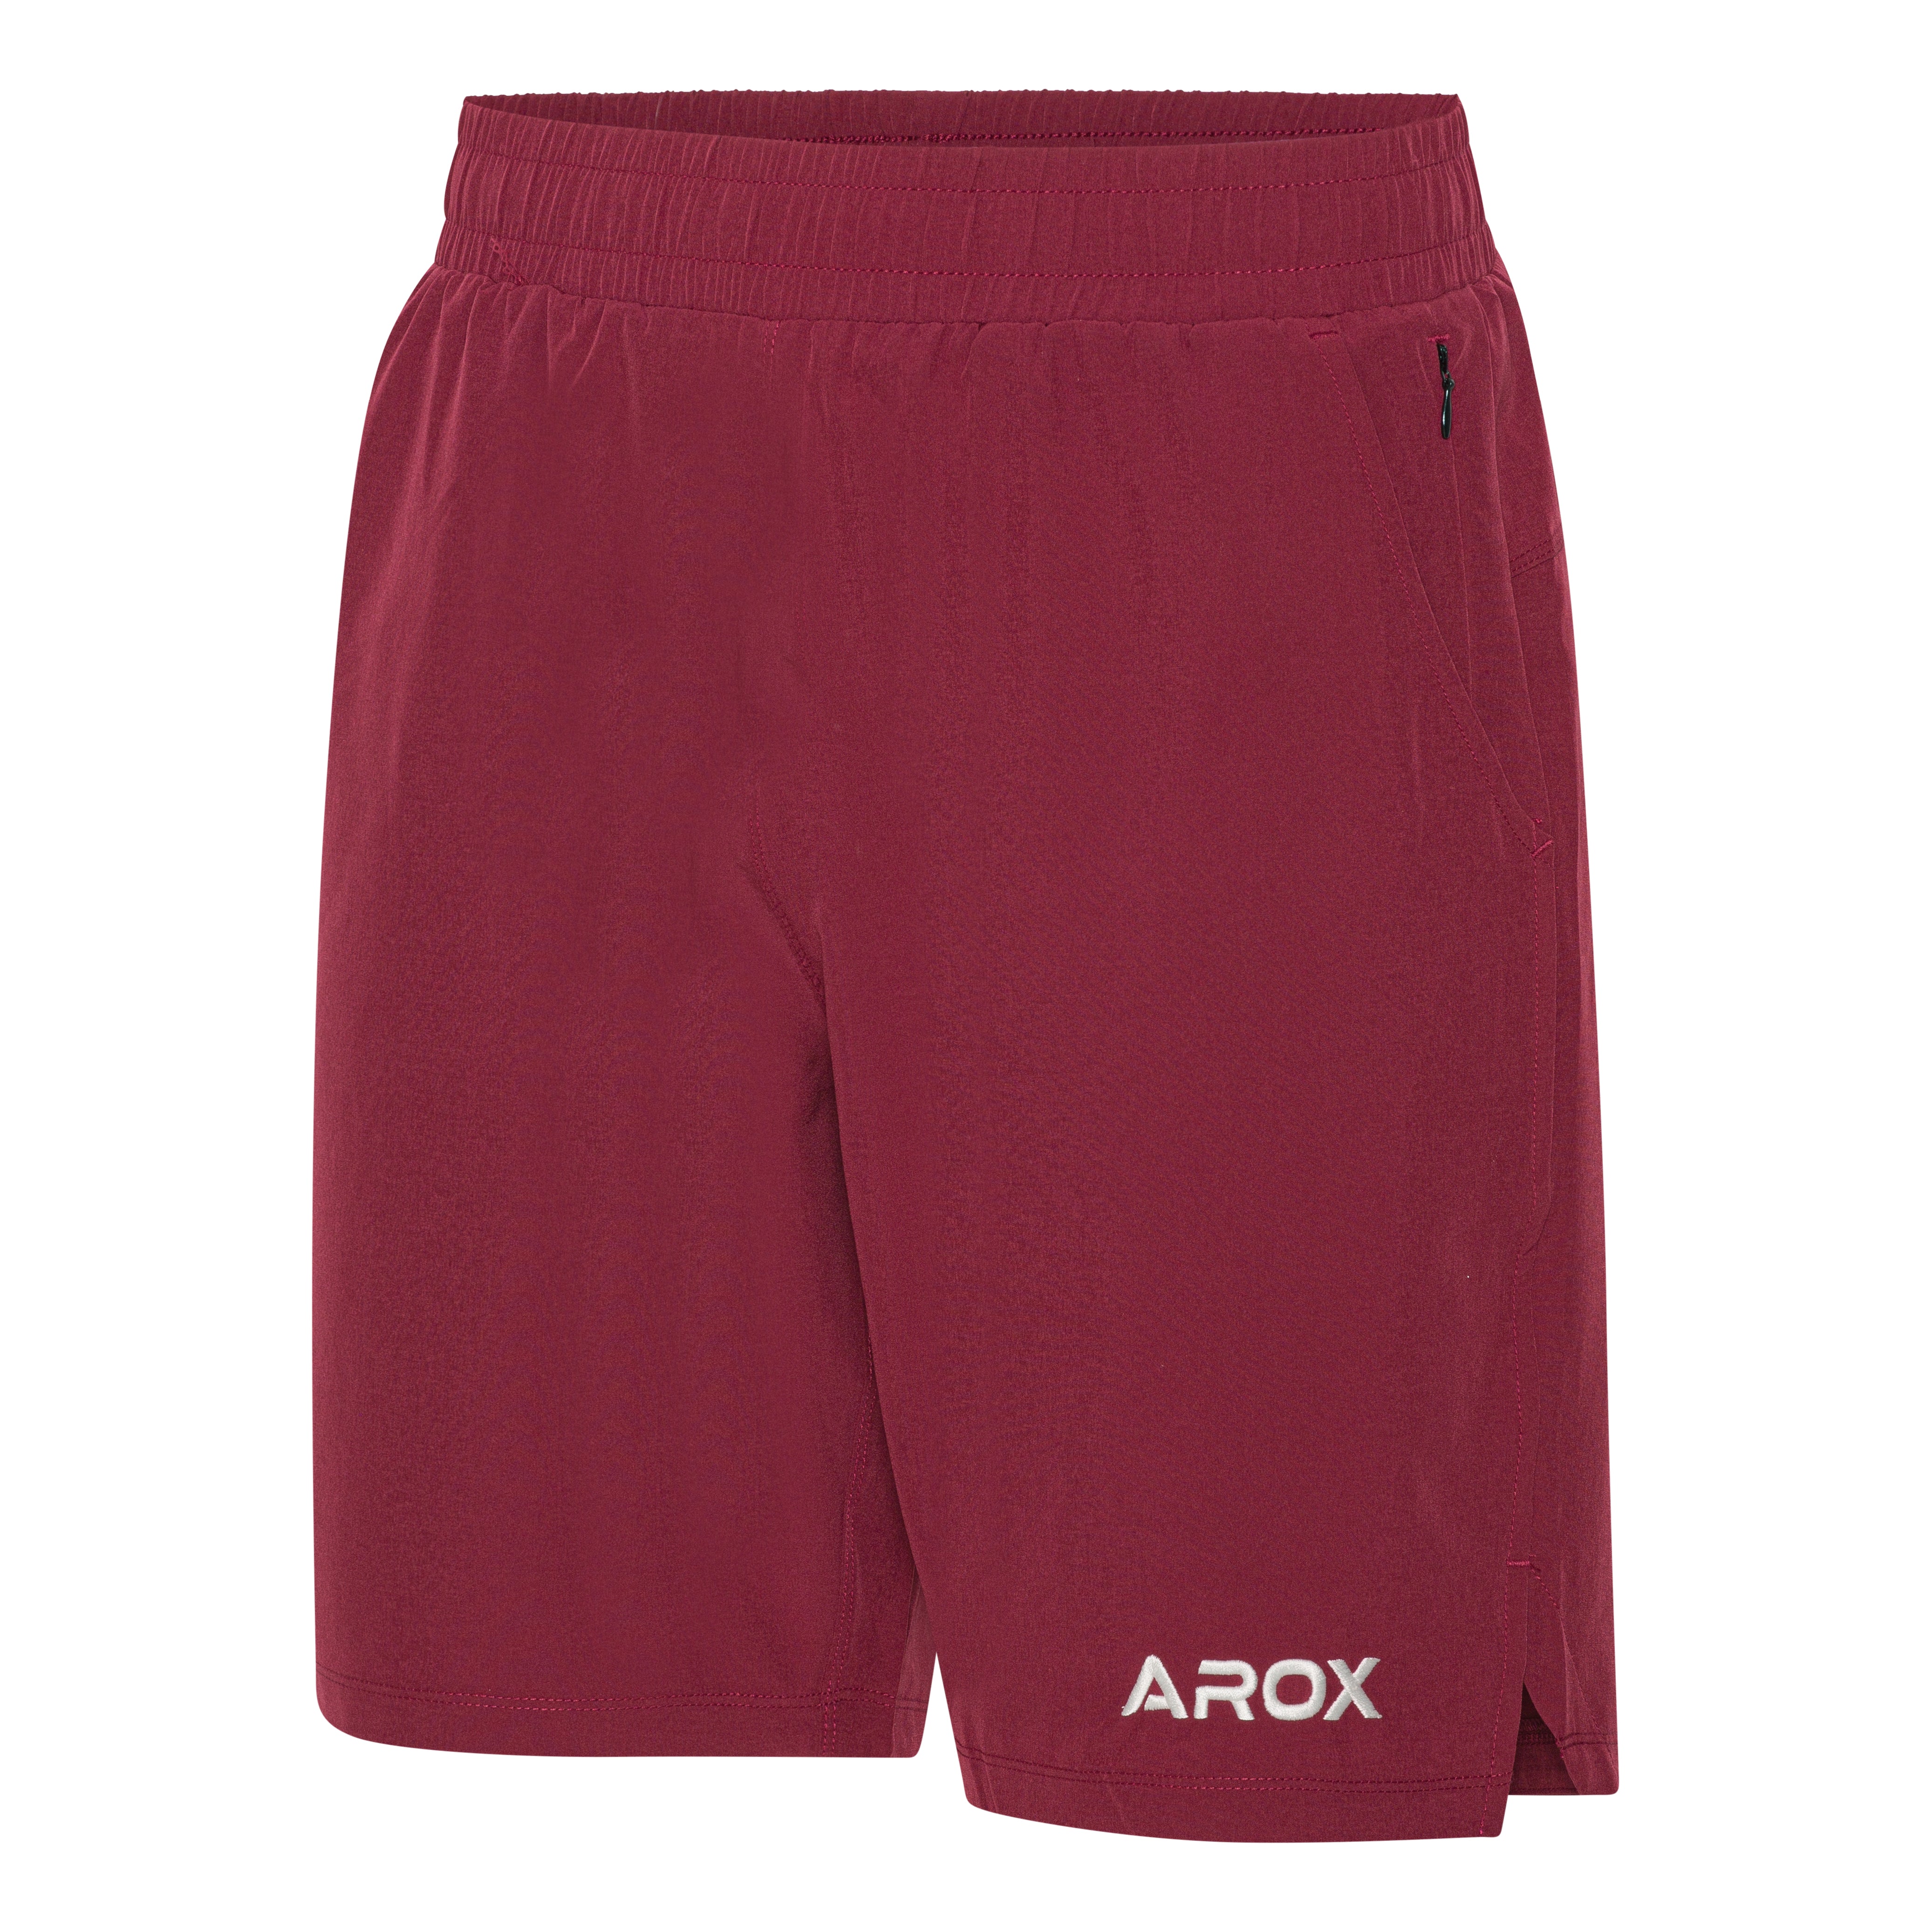 Arox - Dri tech performance shorts